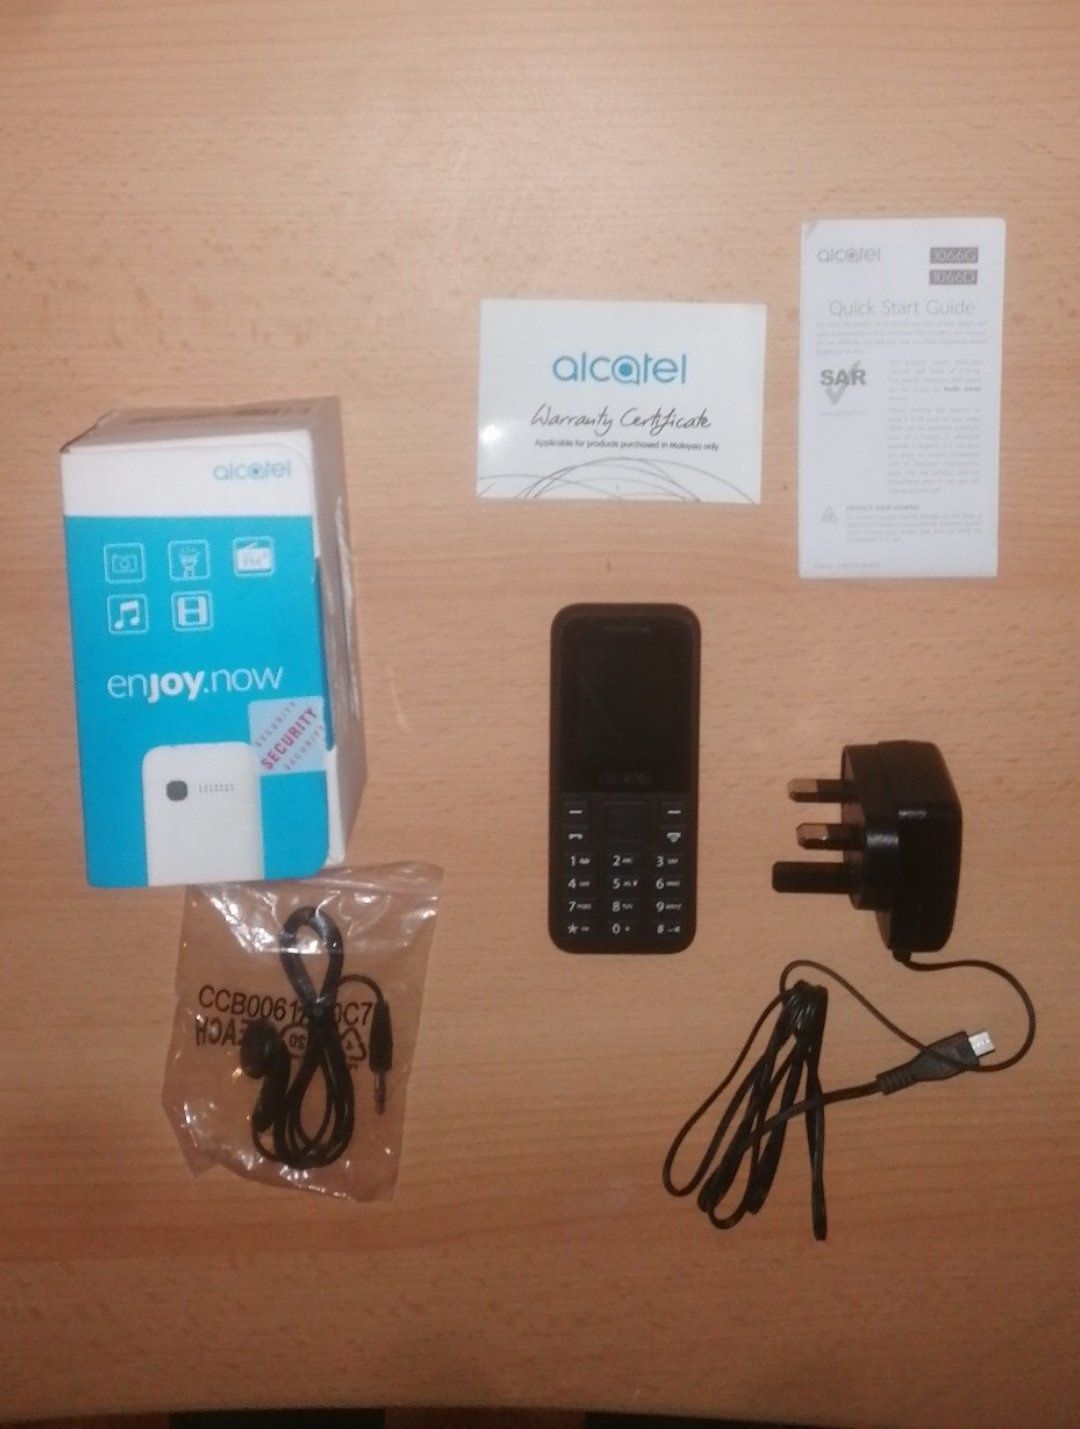 Мобилен телефон Alcatel 1066, Single Sim, Black (чисто нов)